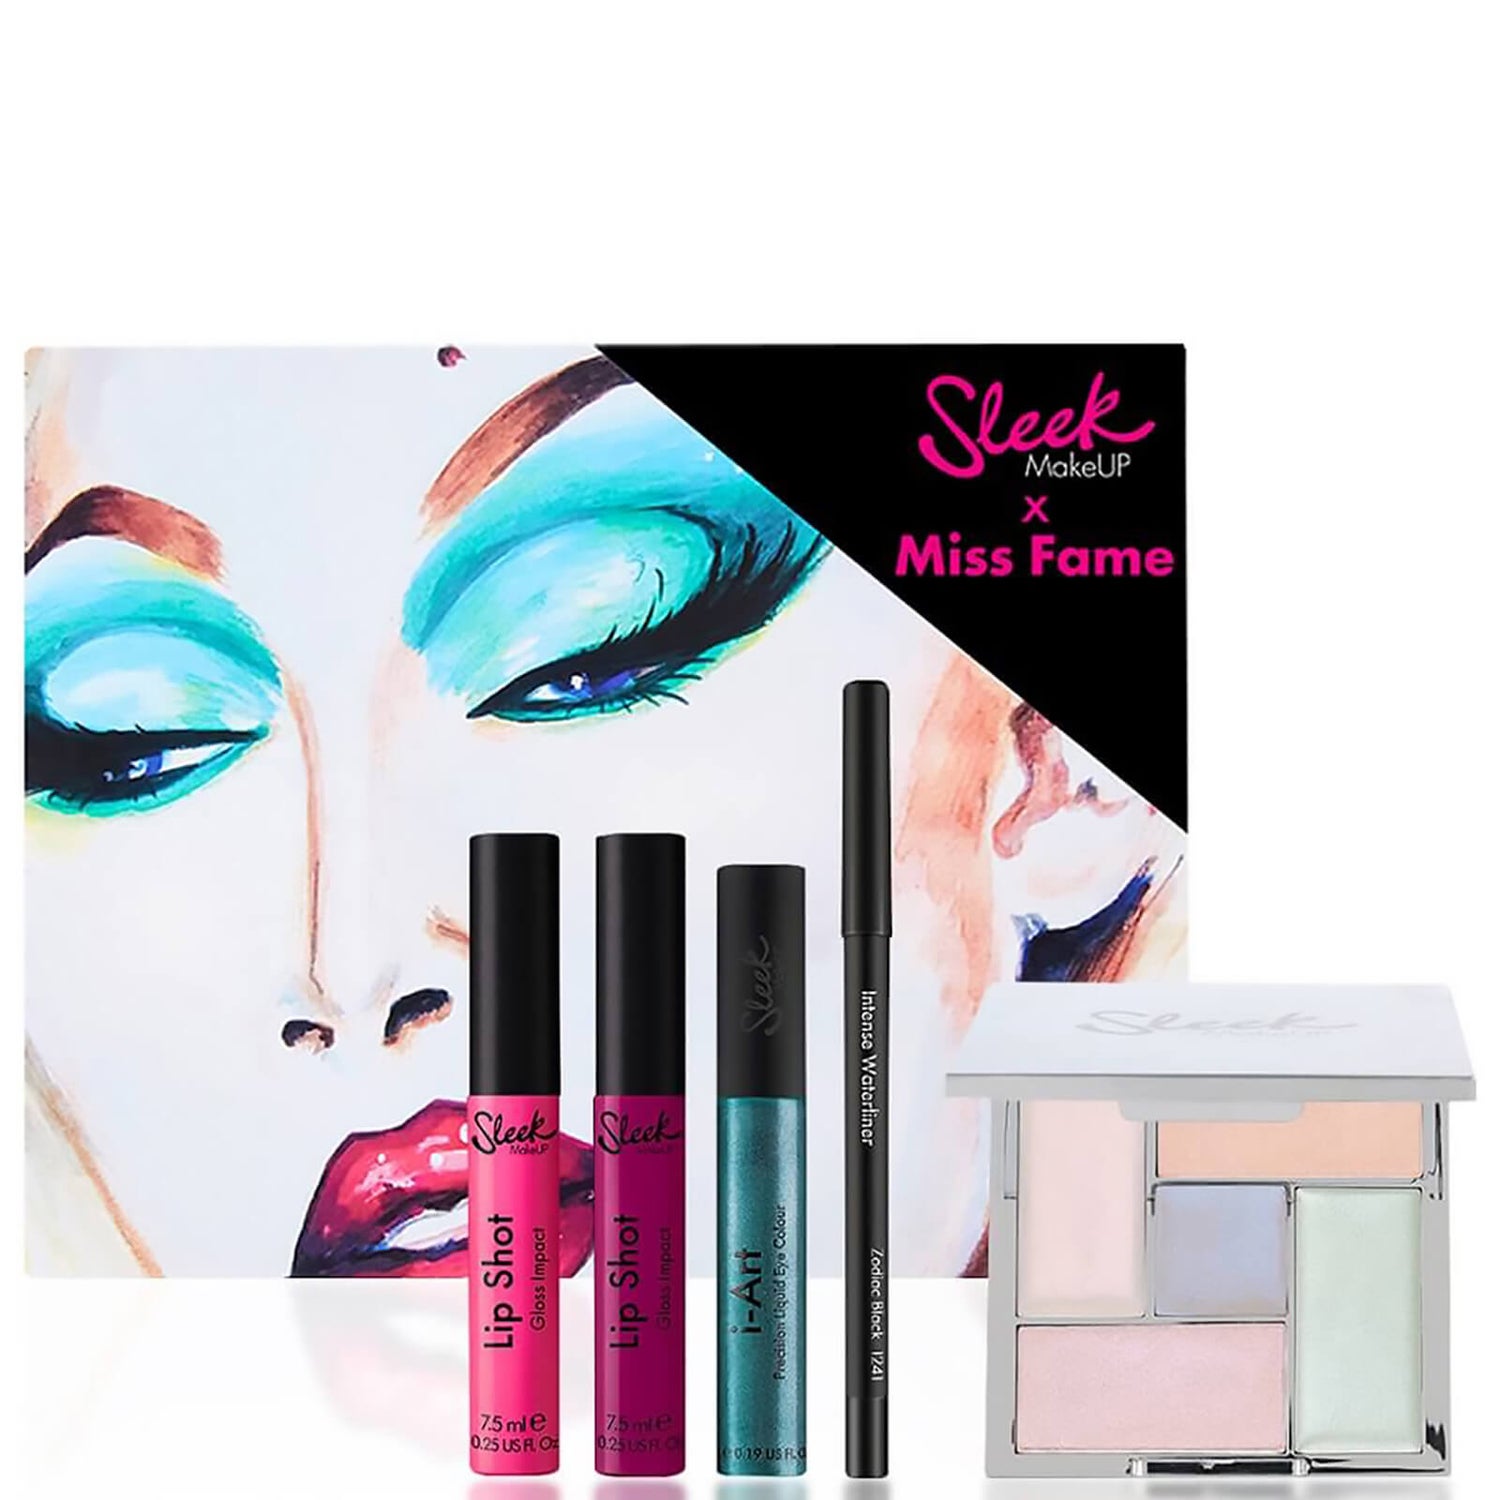 Sleek MakeUP X Miss Fame 合作款美妆套装 | 专享版